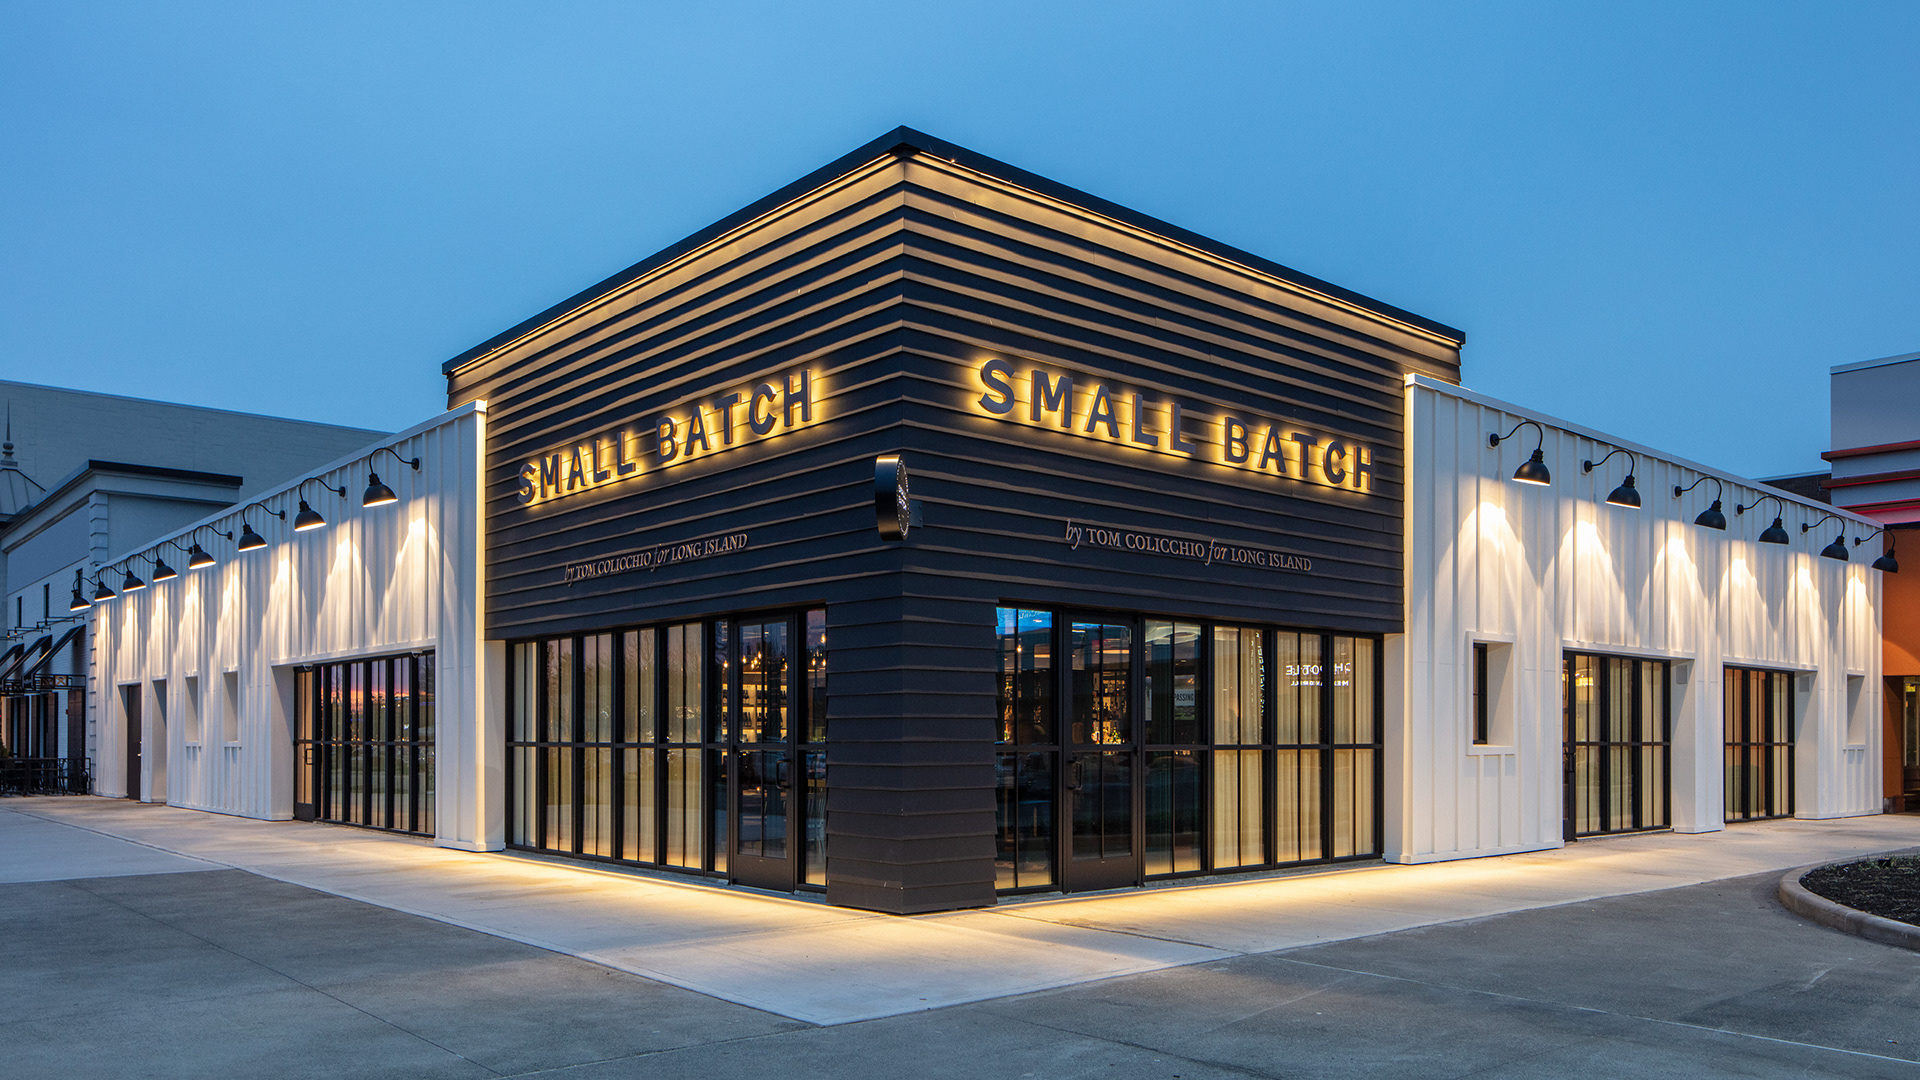 Small Batch餐厅建筑设计